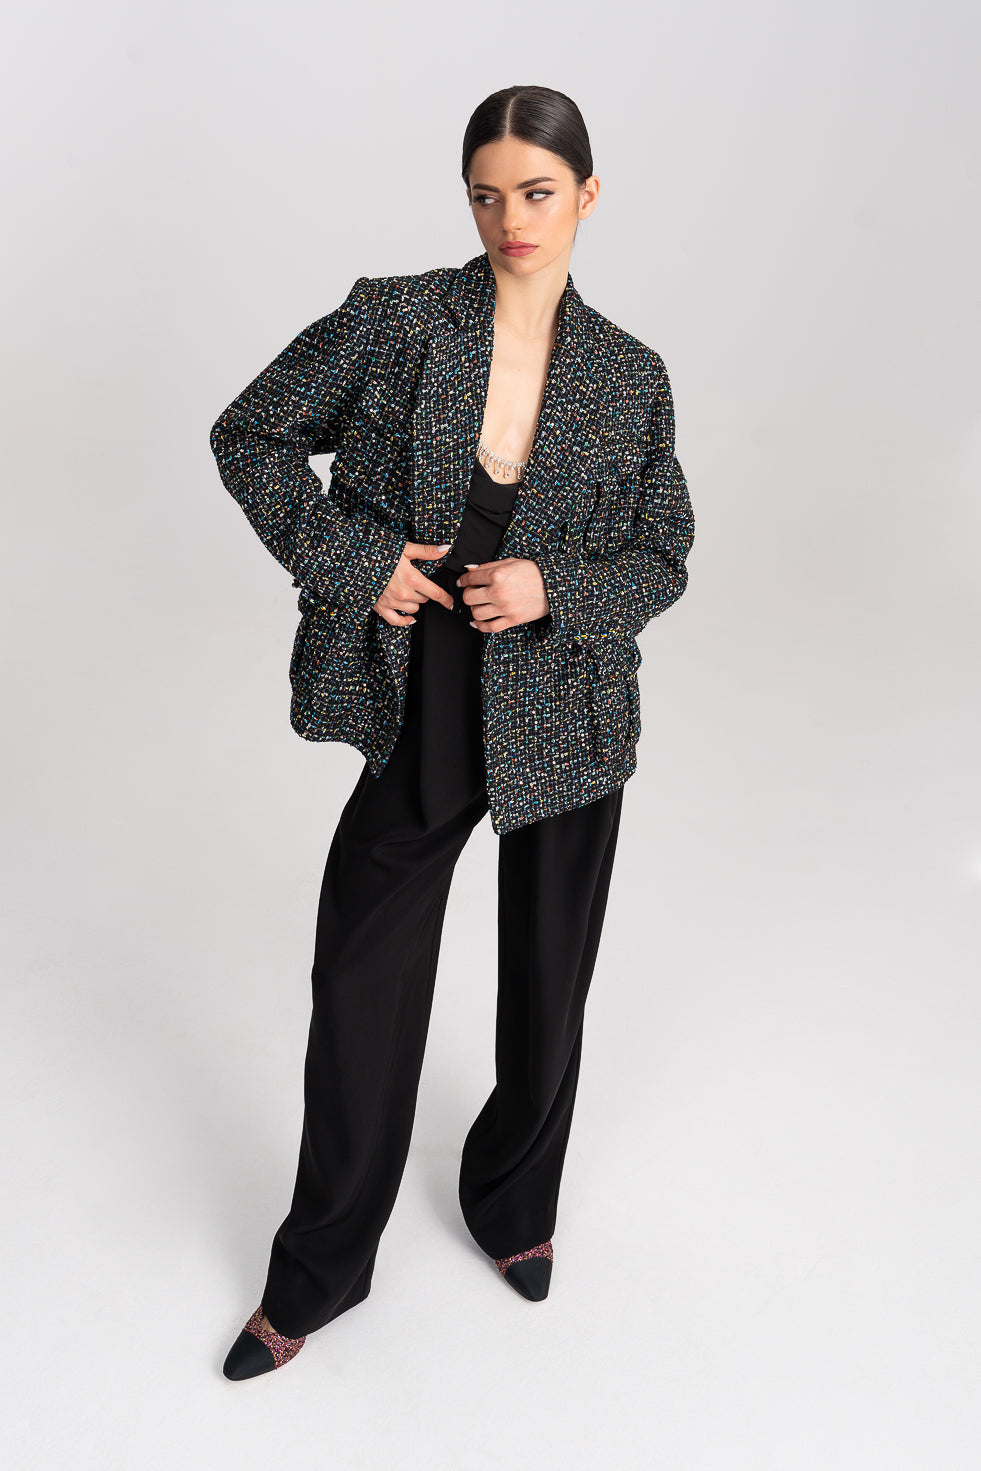 'Samara' Metallic Tweed And Sequins-Embellished Blazer